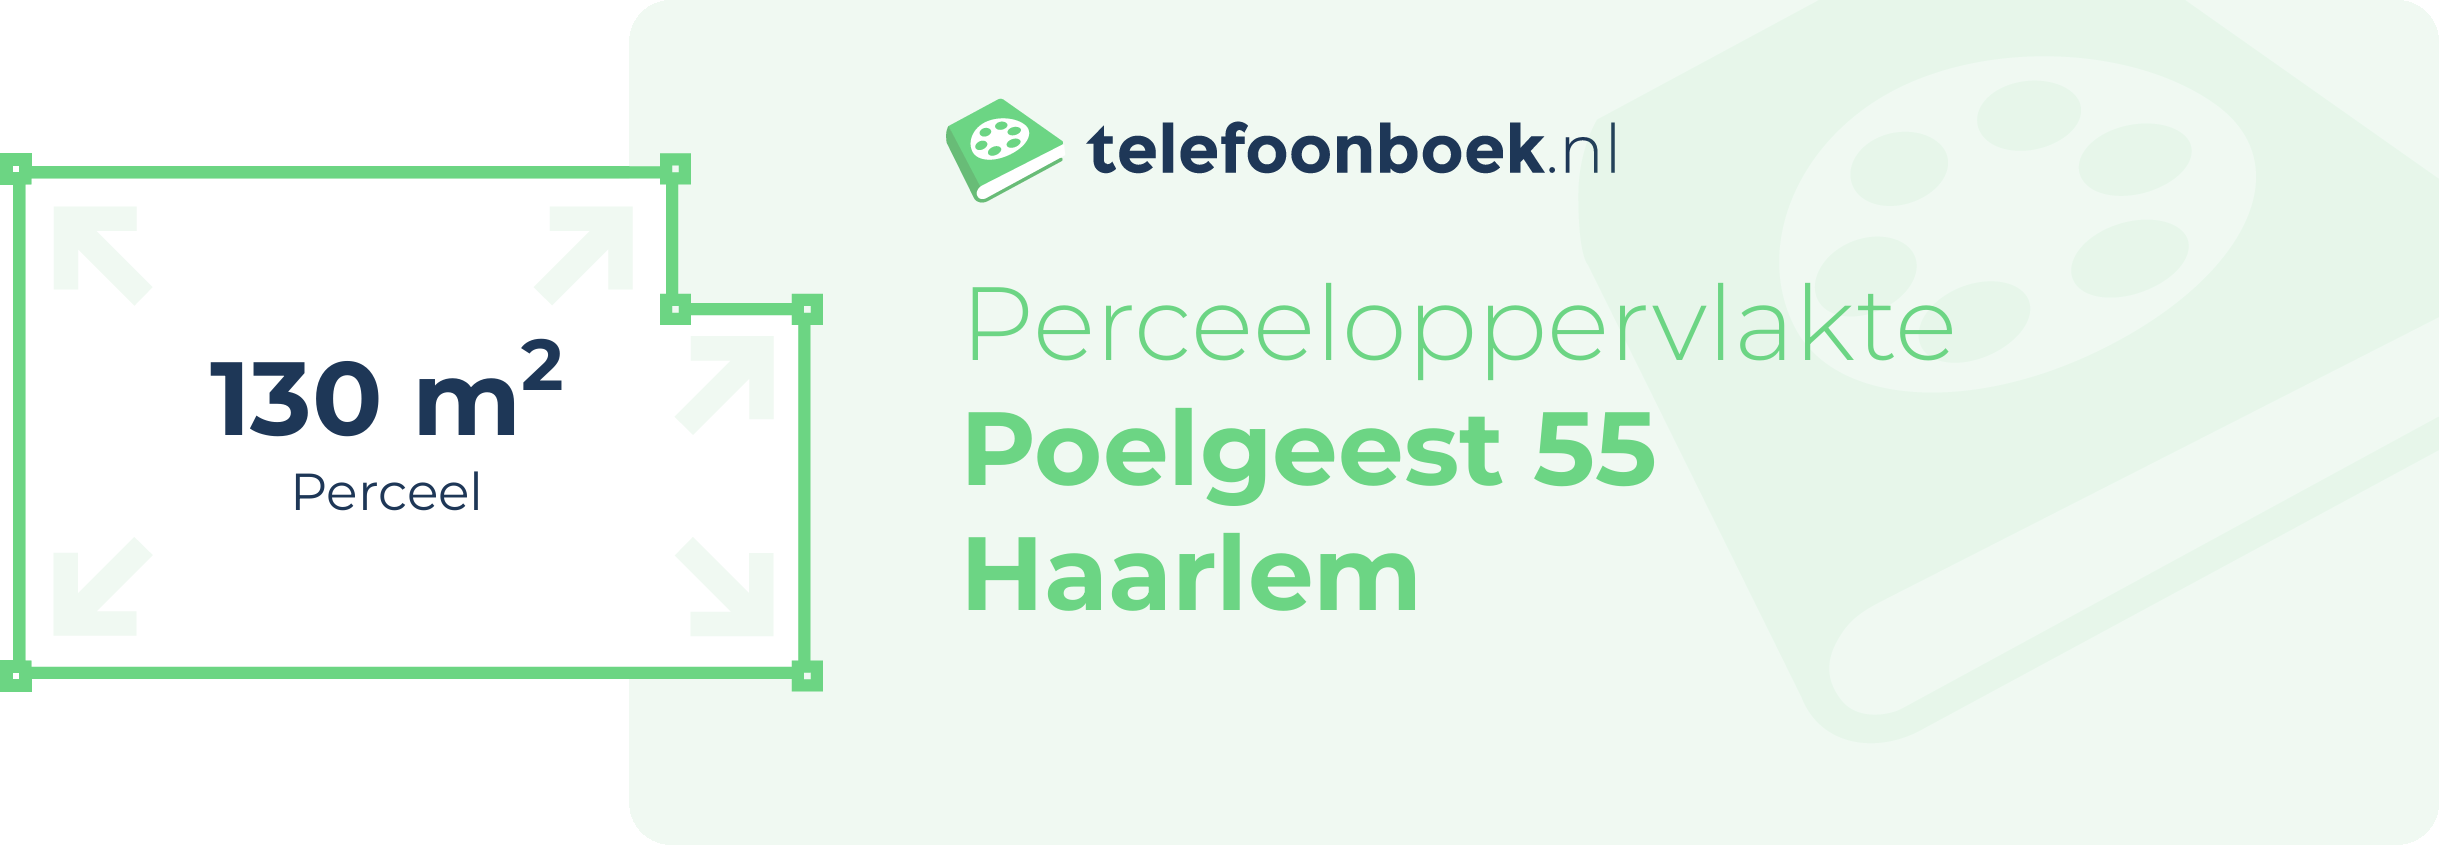 Perceeloppervlakte Poelgeest 55 Haarlem